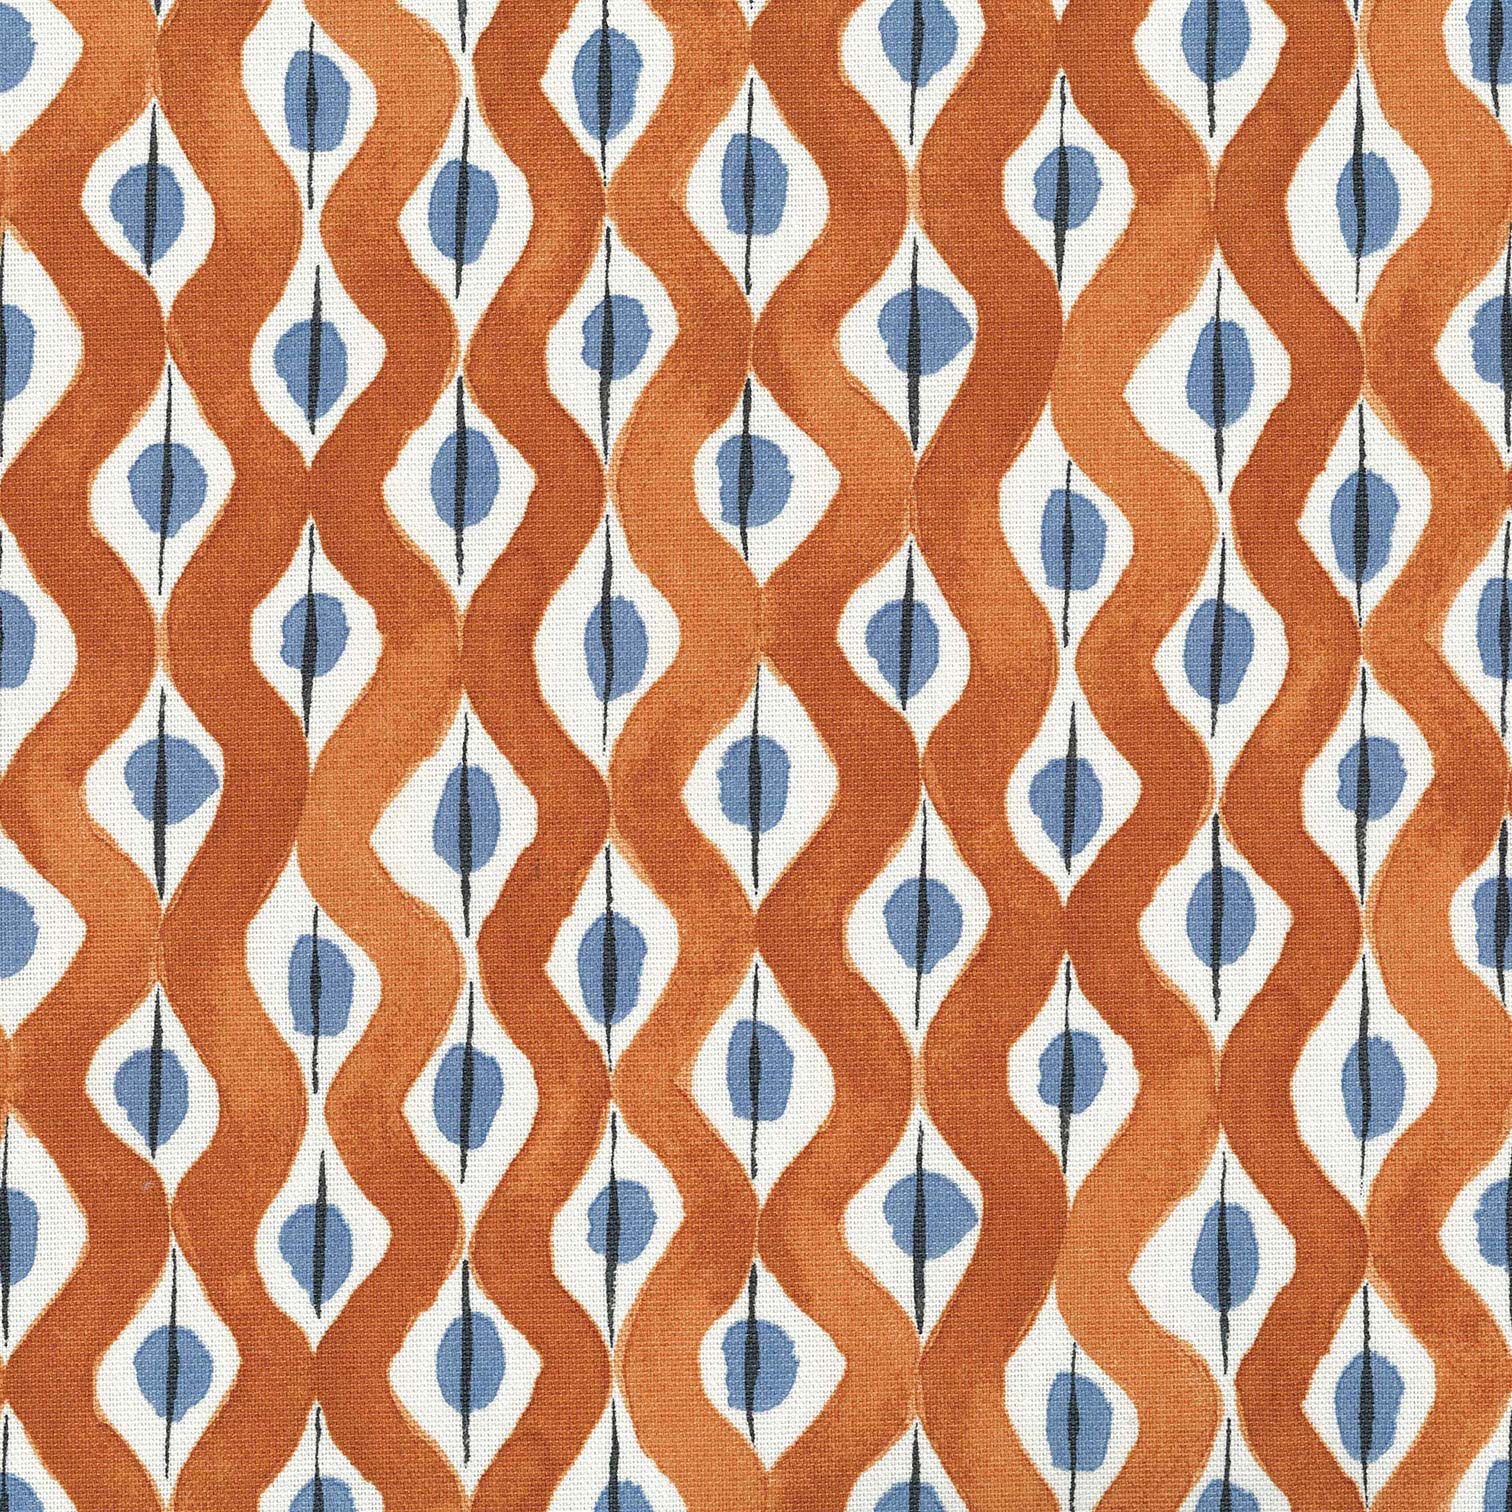 Nina Campbell Fabric - Les Rêves Beau Rivage Orange/Blue NCF4295-05